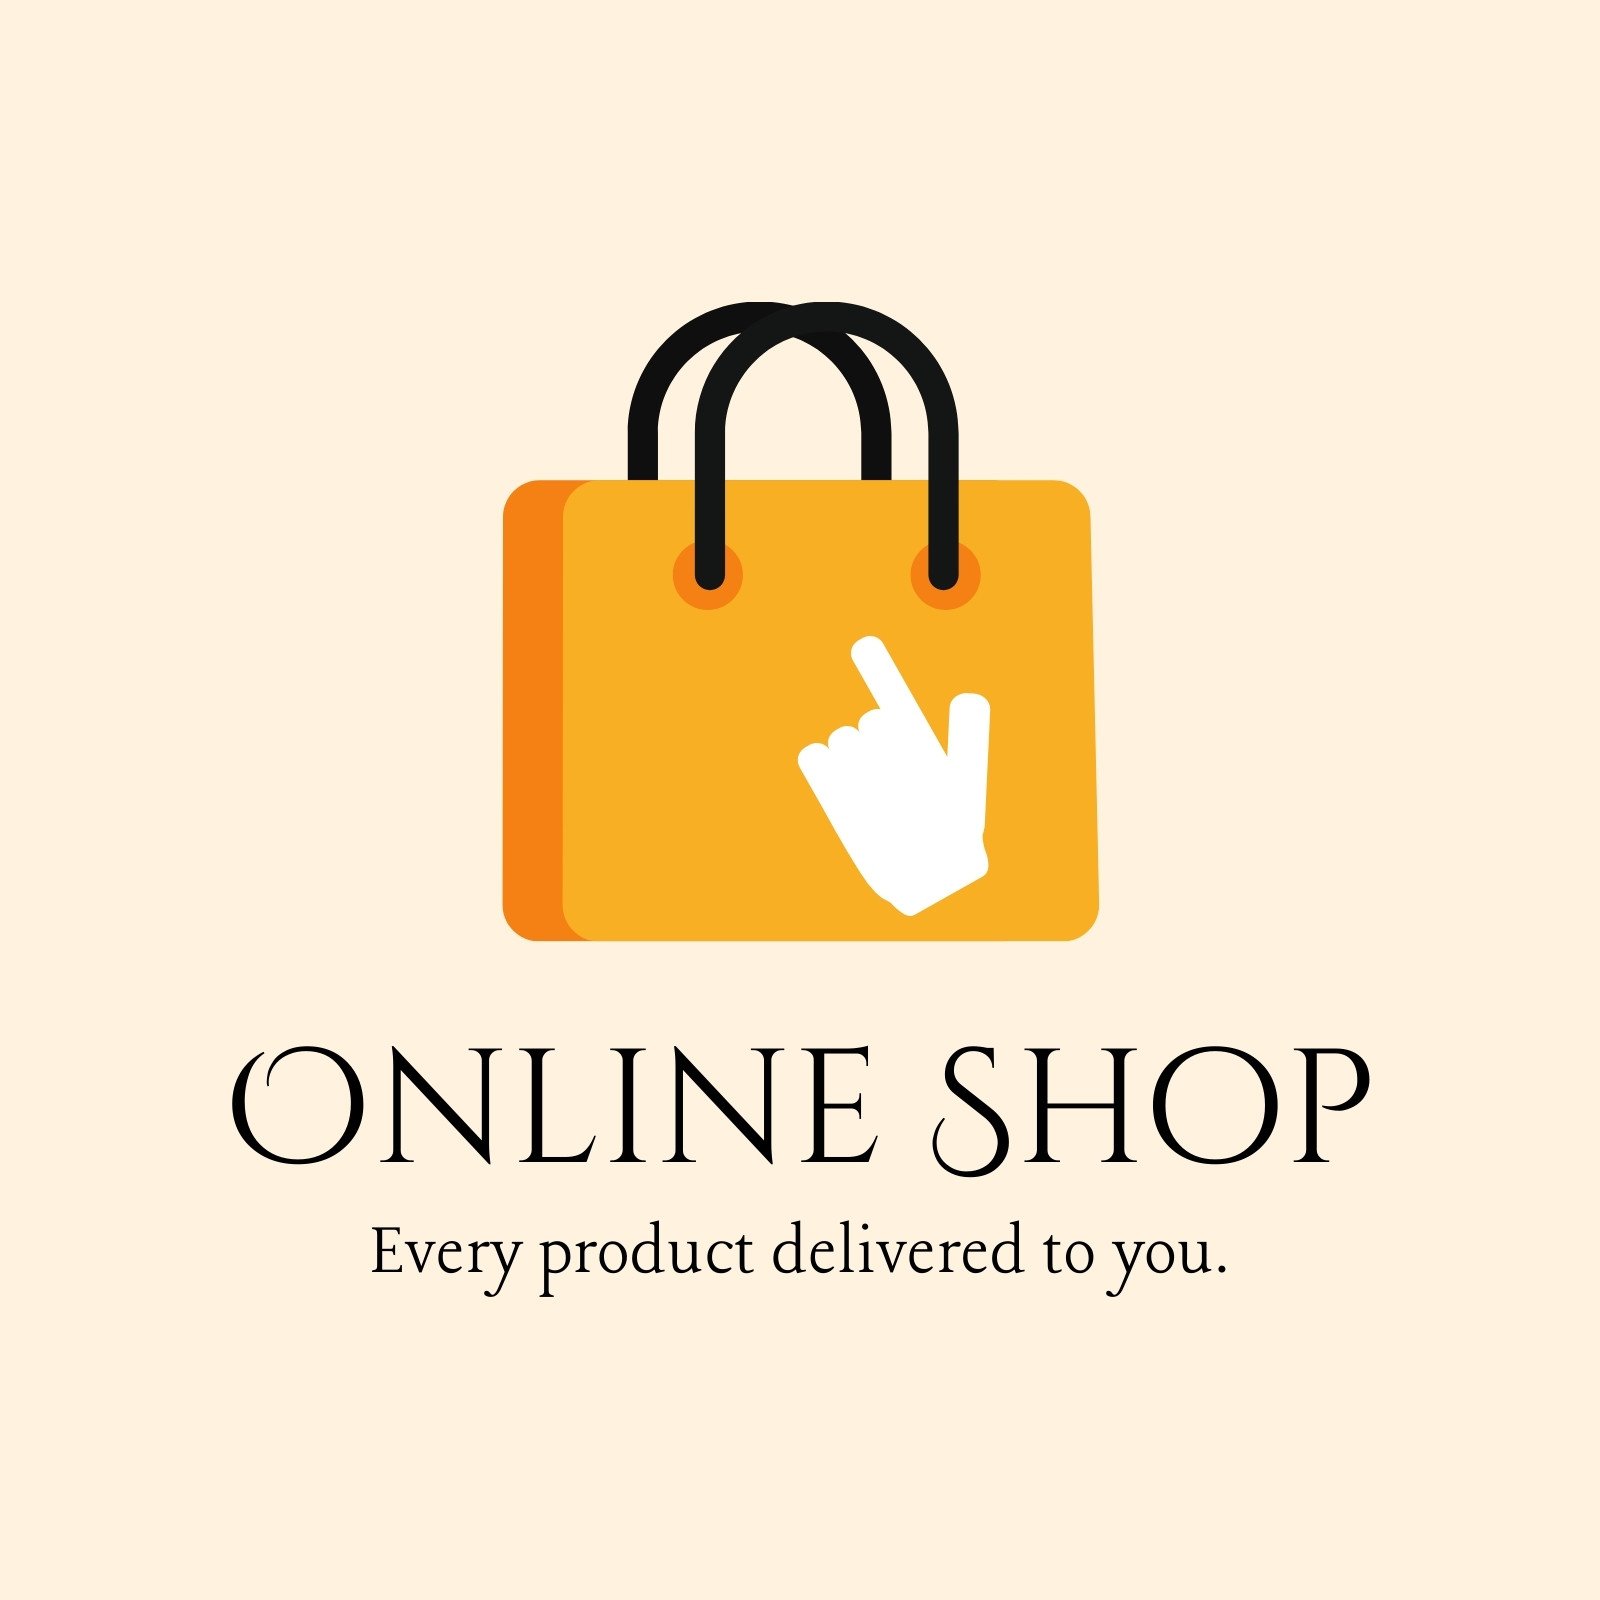 https://marketplace.canva.com/EAE72jfknRM/2/0/1600w/canva-yellow-and-black-online-shop-business-logo-AvRZNVCTIeg.jpg